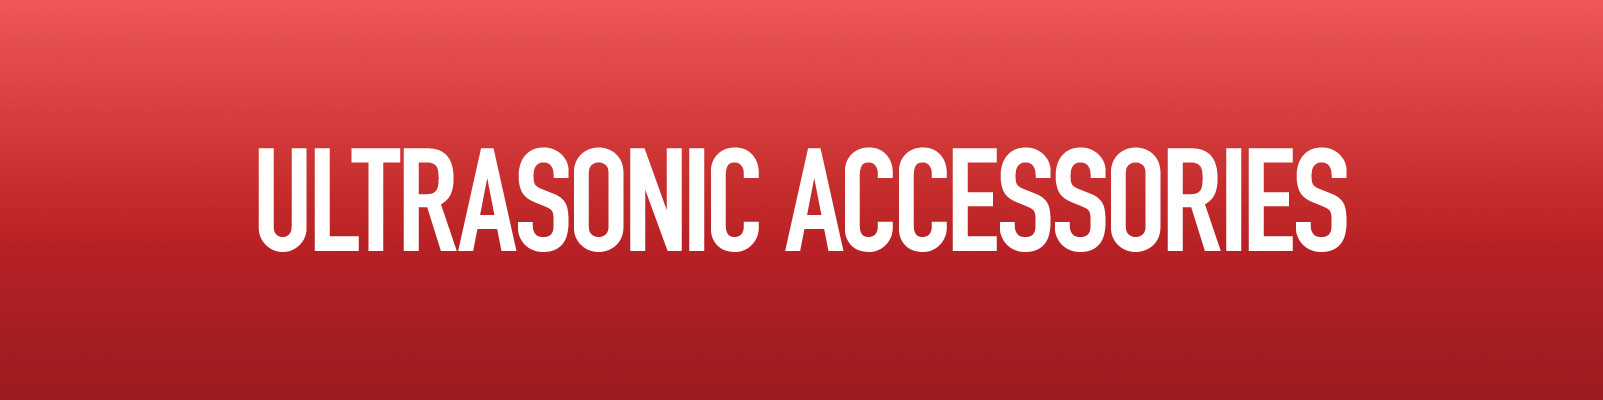 Ultrasonic Accessories